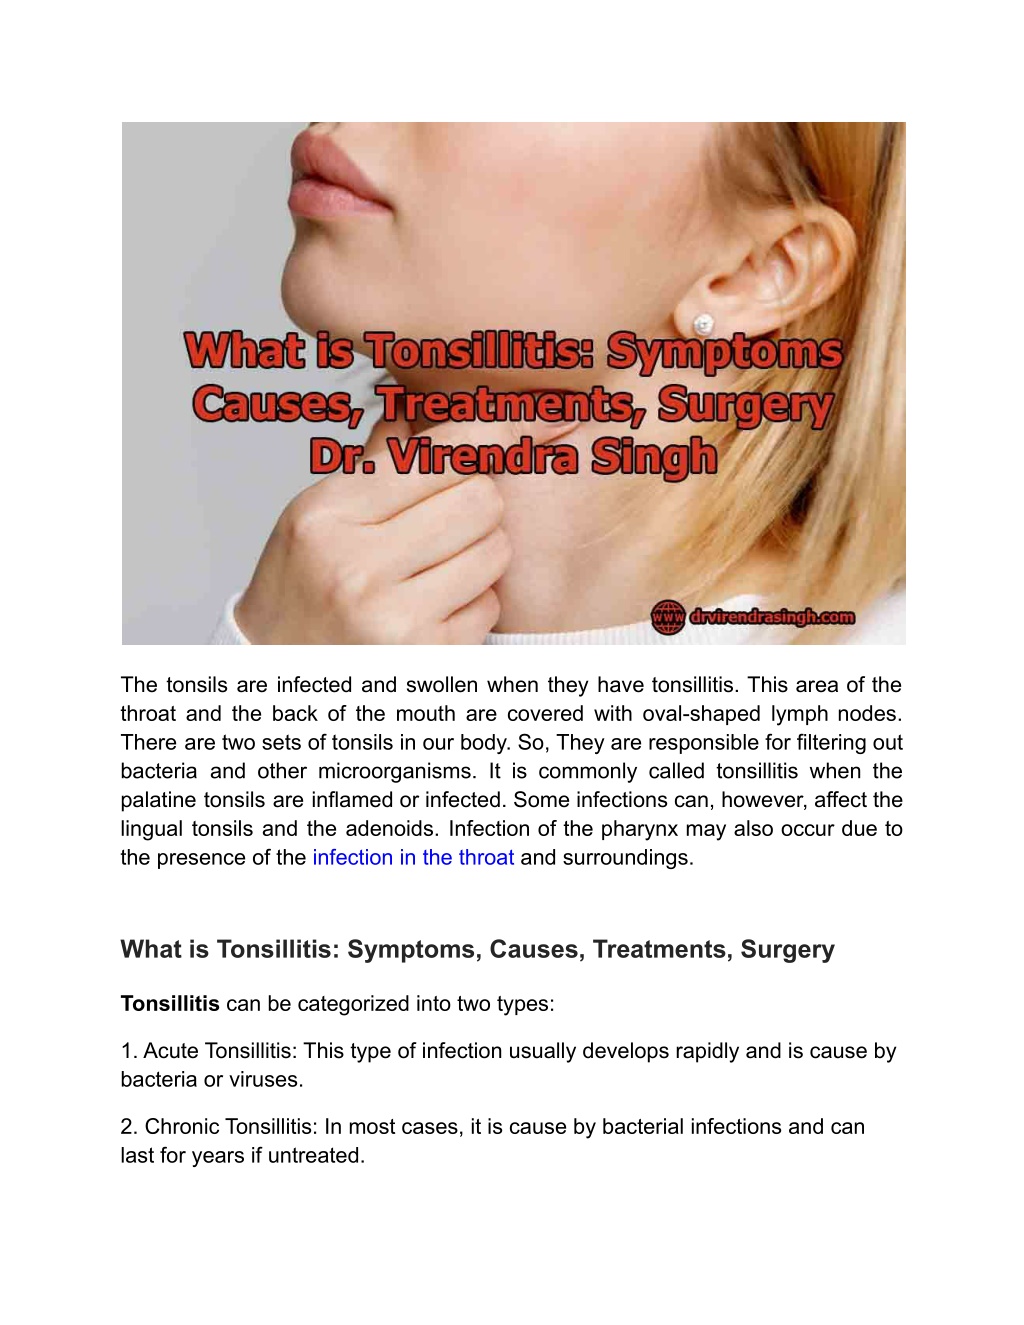 Ppt What Is Tonsillitis Symptoms Causes Treatments Surgery Dr